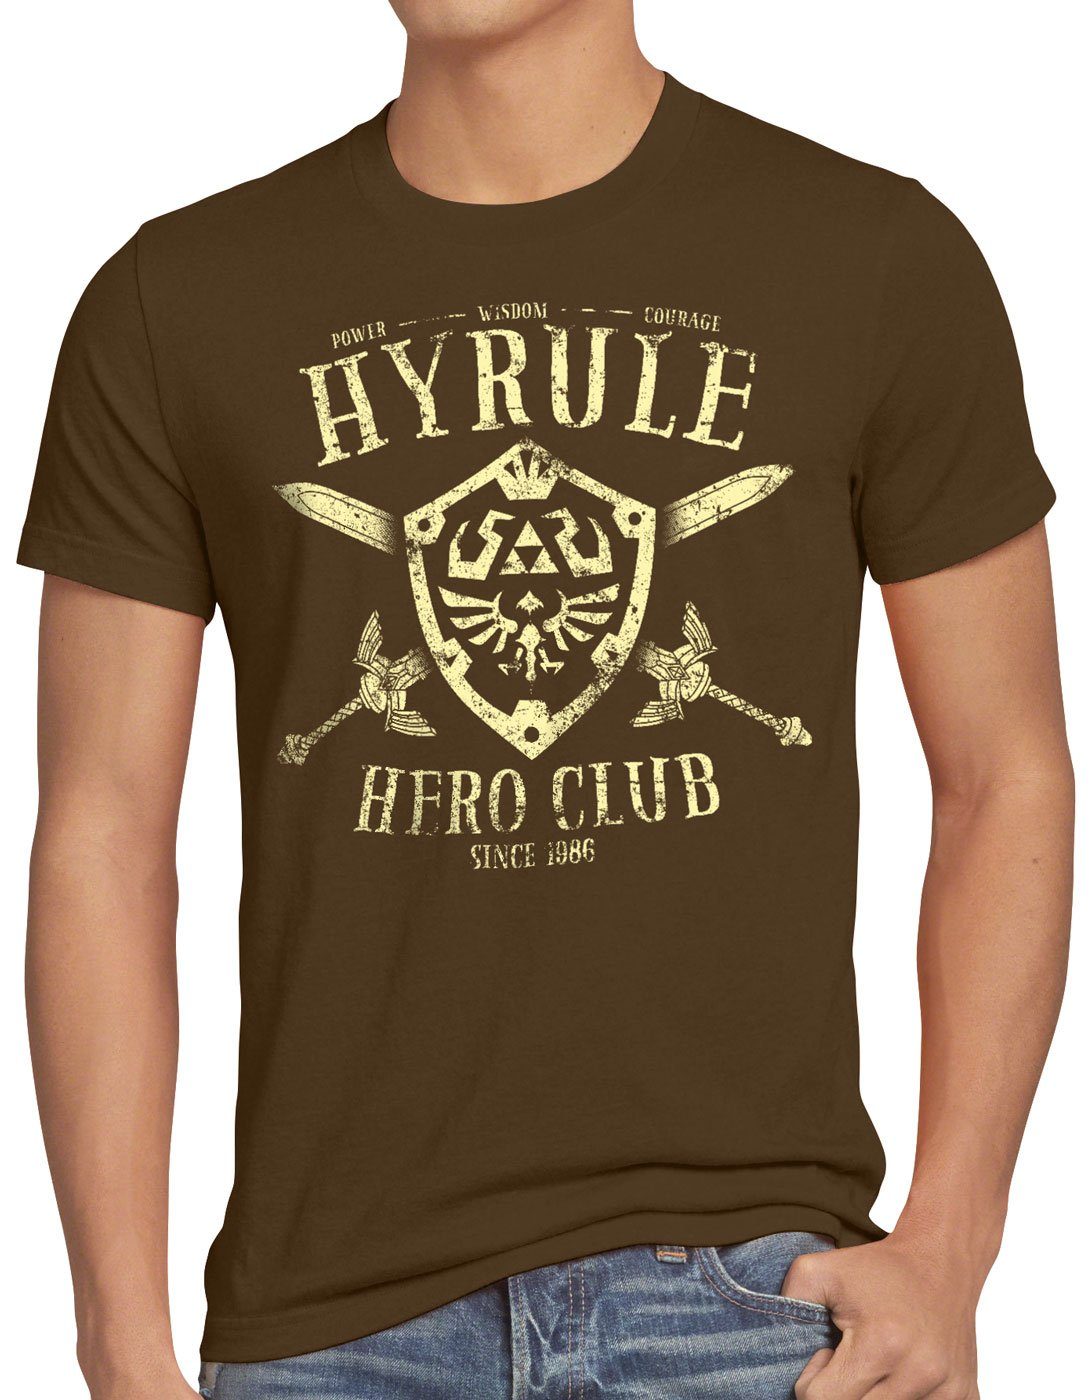 3ds Print-Shirt T-Shirt Club Hyrule Ocarina link Hero style3 braun Herren